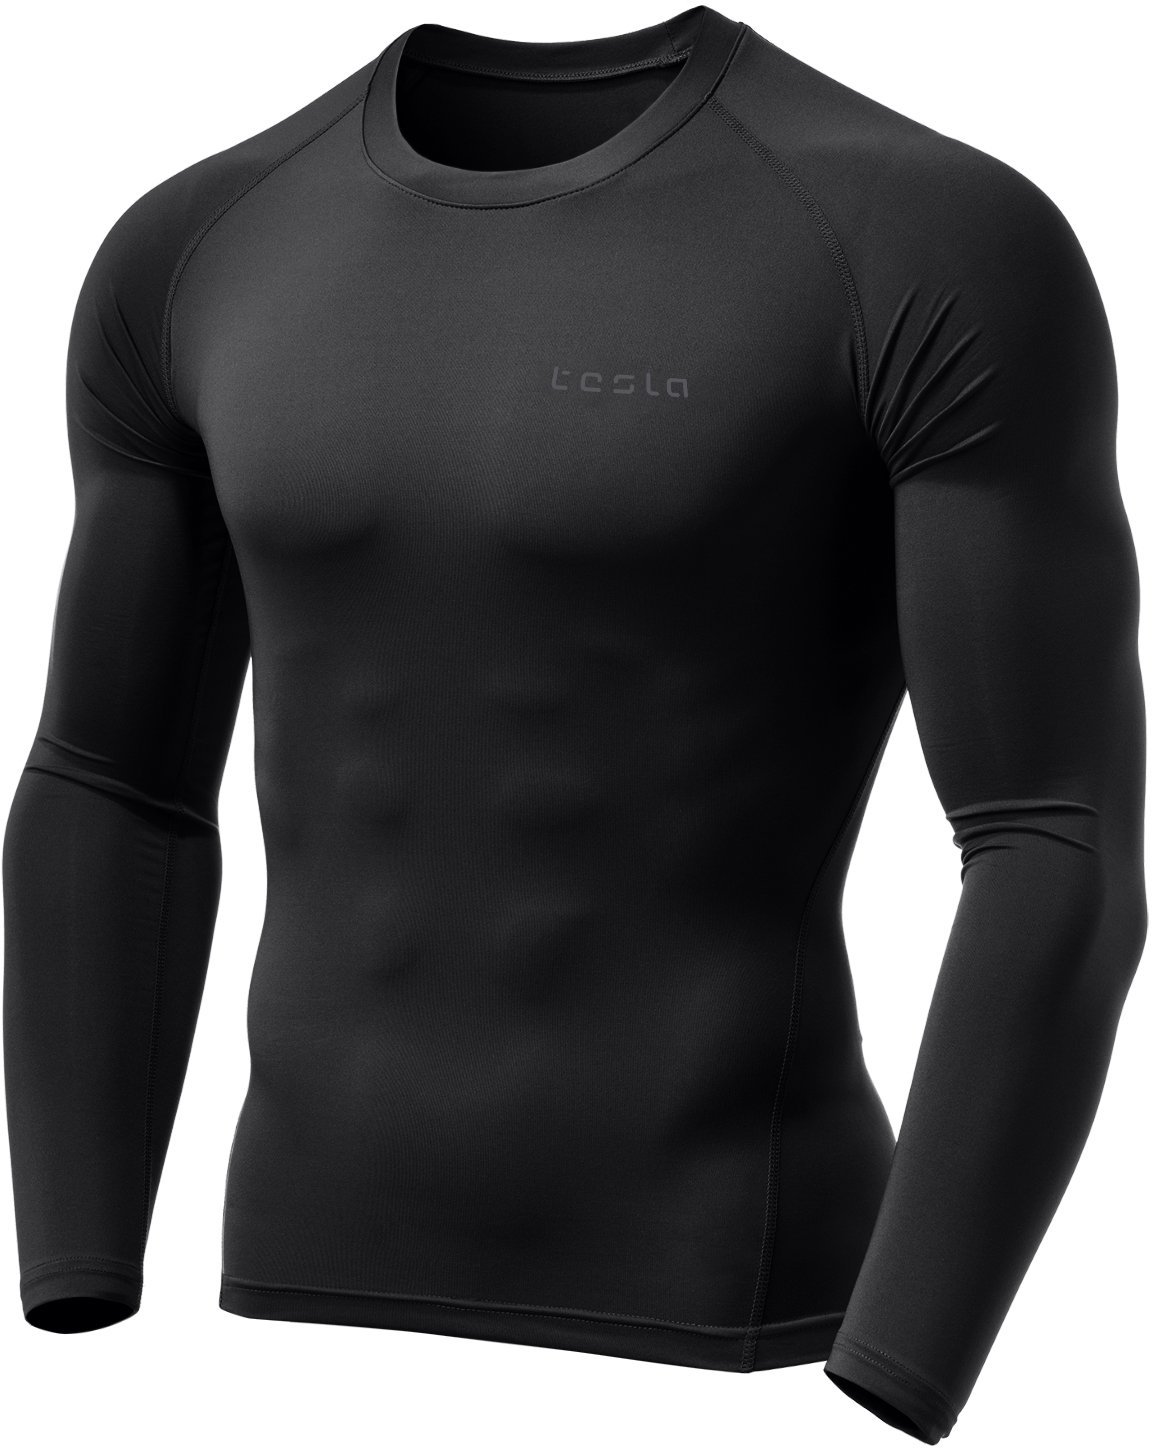 Men's Winter Thermal Baselayer Compression Shirt Long Sleeve Top Sweatshirt Hot